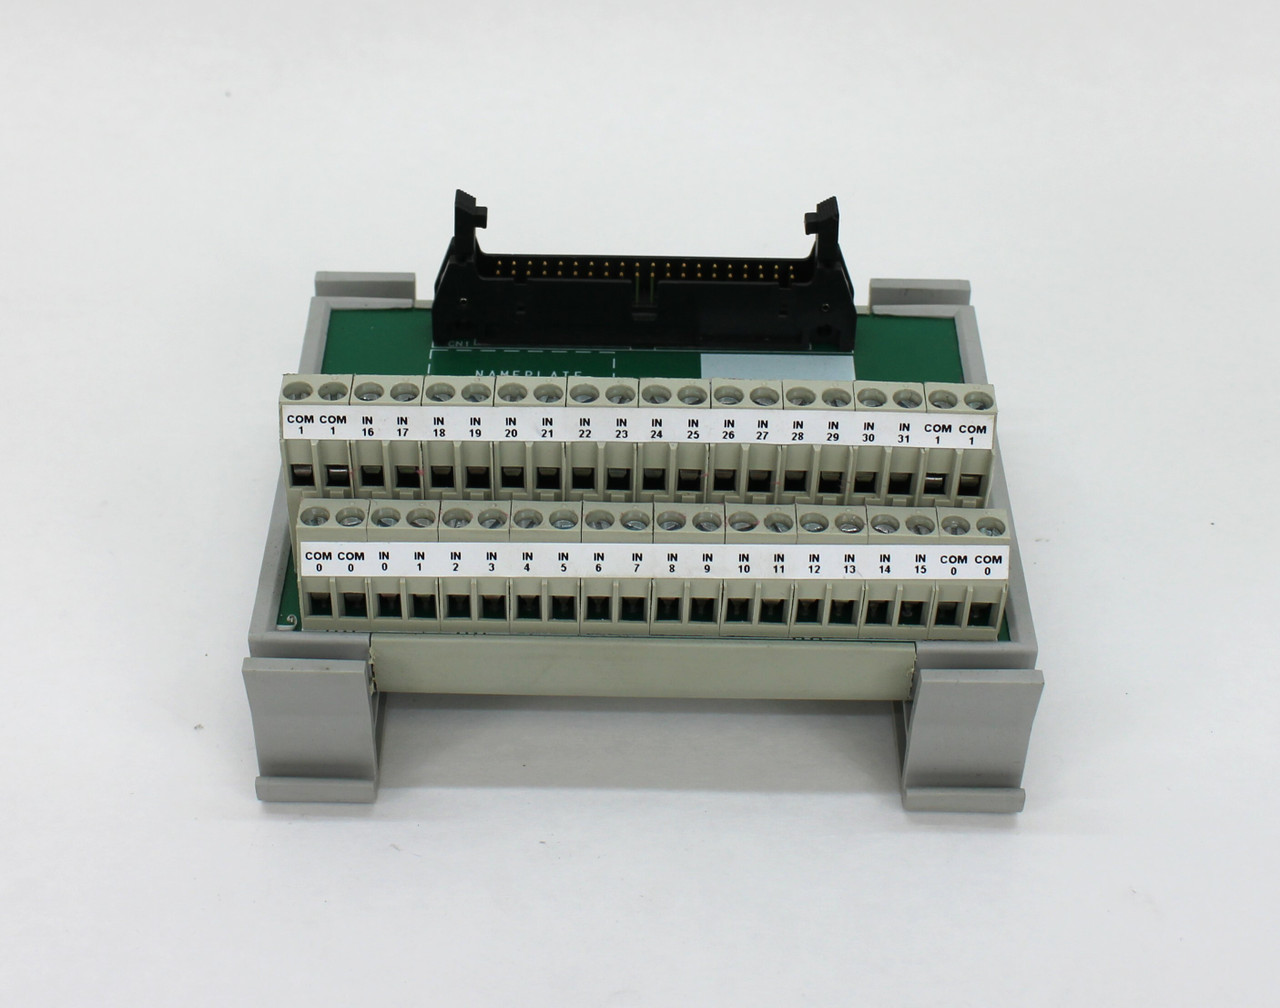 Allen Bradley 1492-IFM40F Interface Module